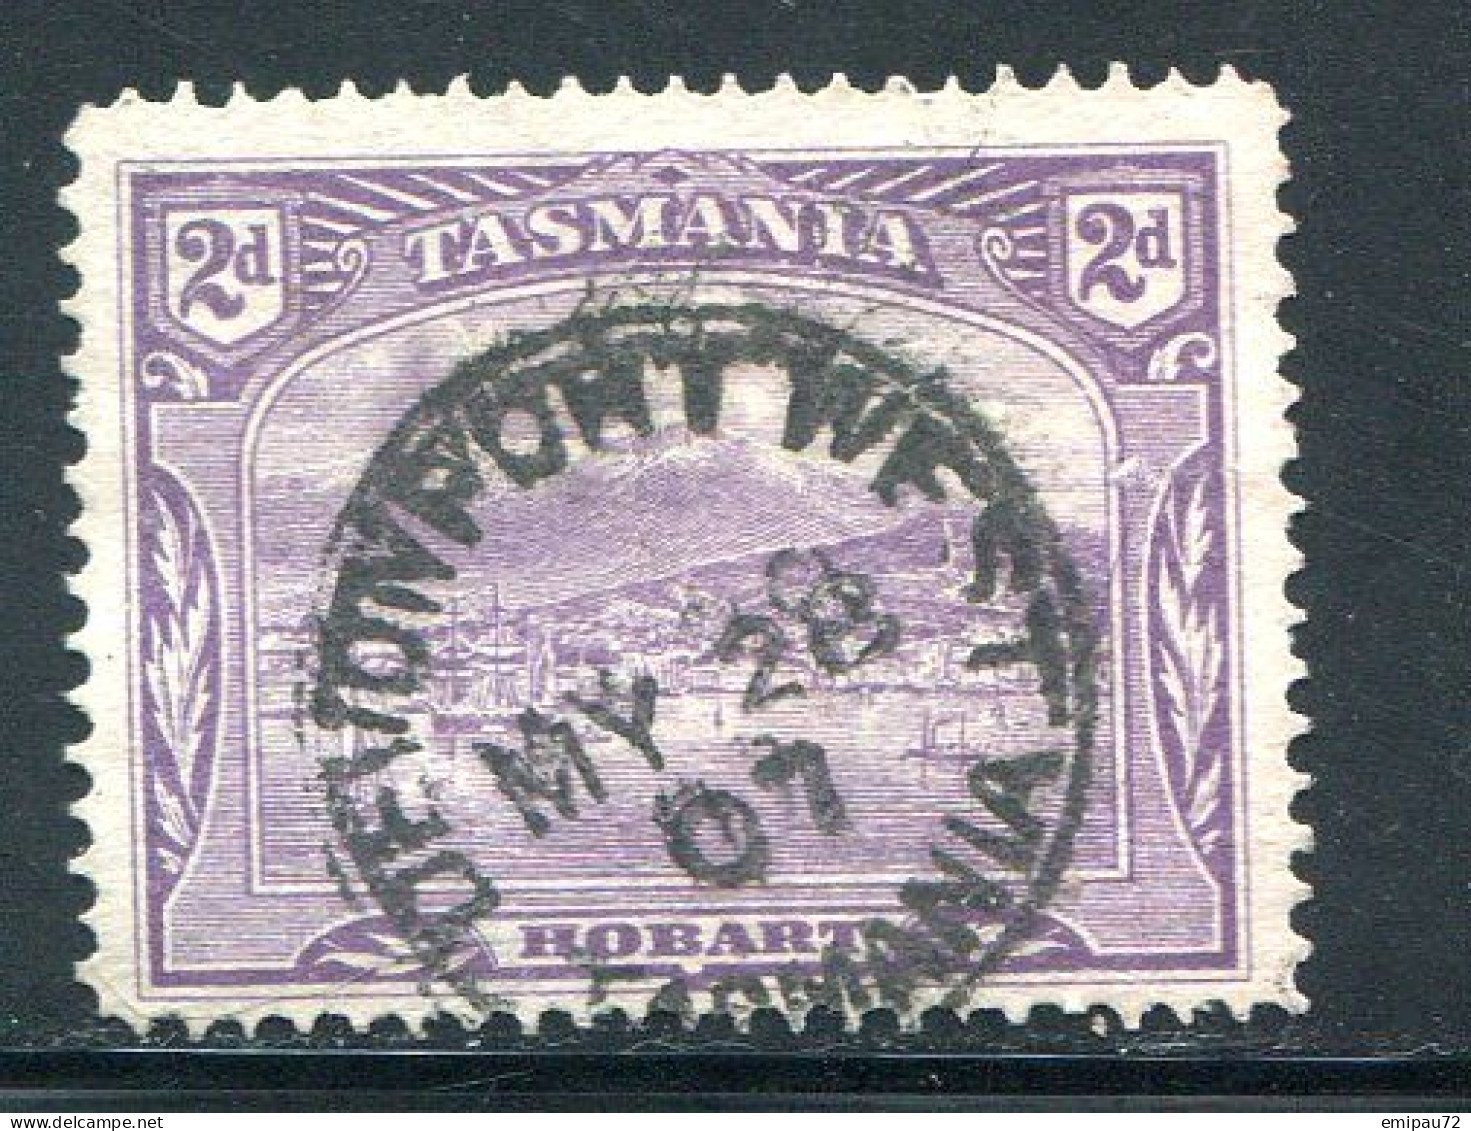 TASMANIE- Y&T N°76- Oblitéré (très Belle Oblitération!!!) - Used Stamps